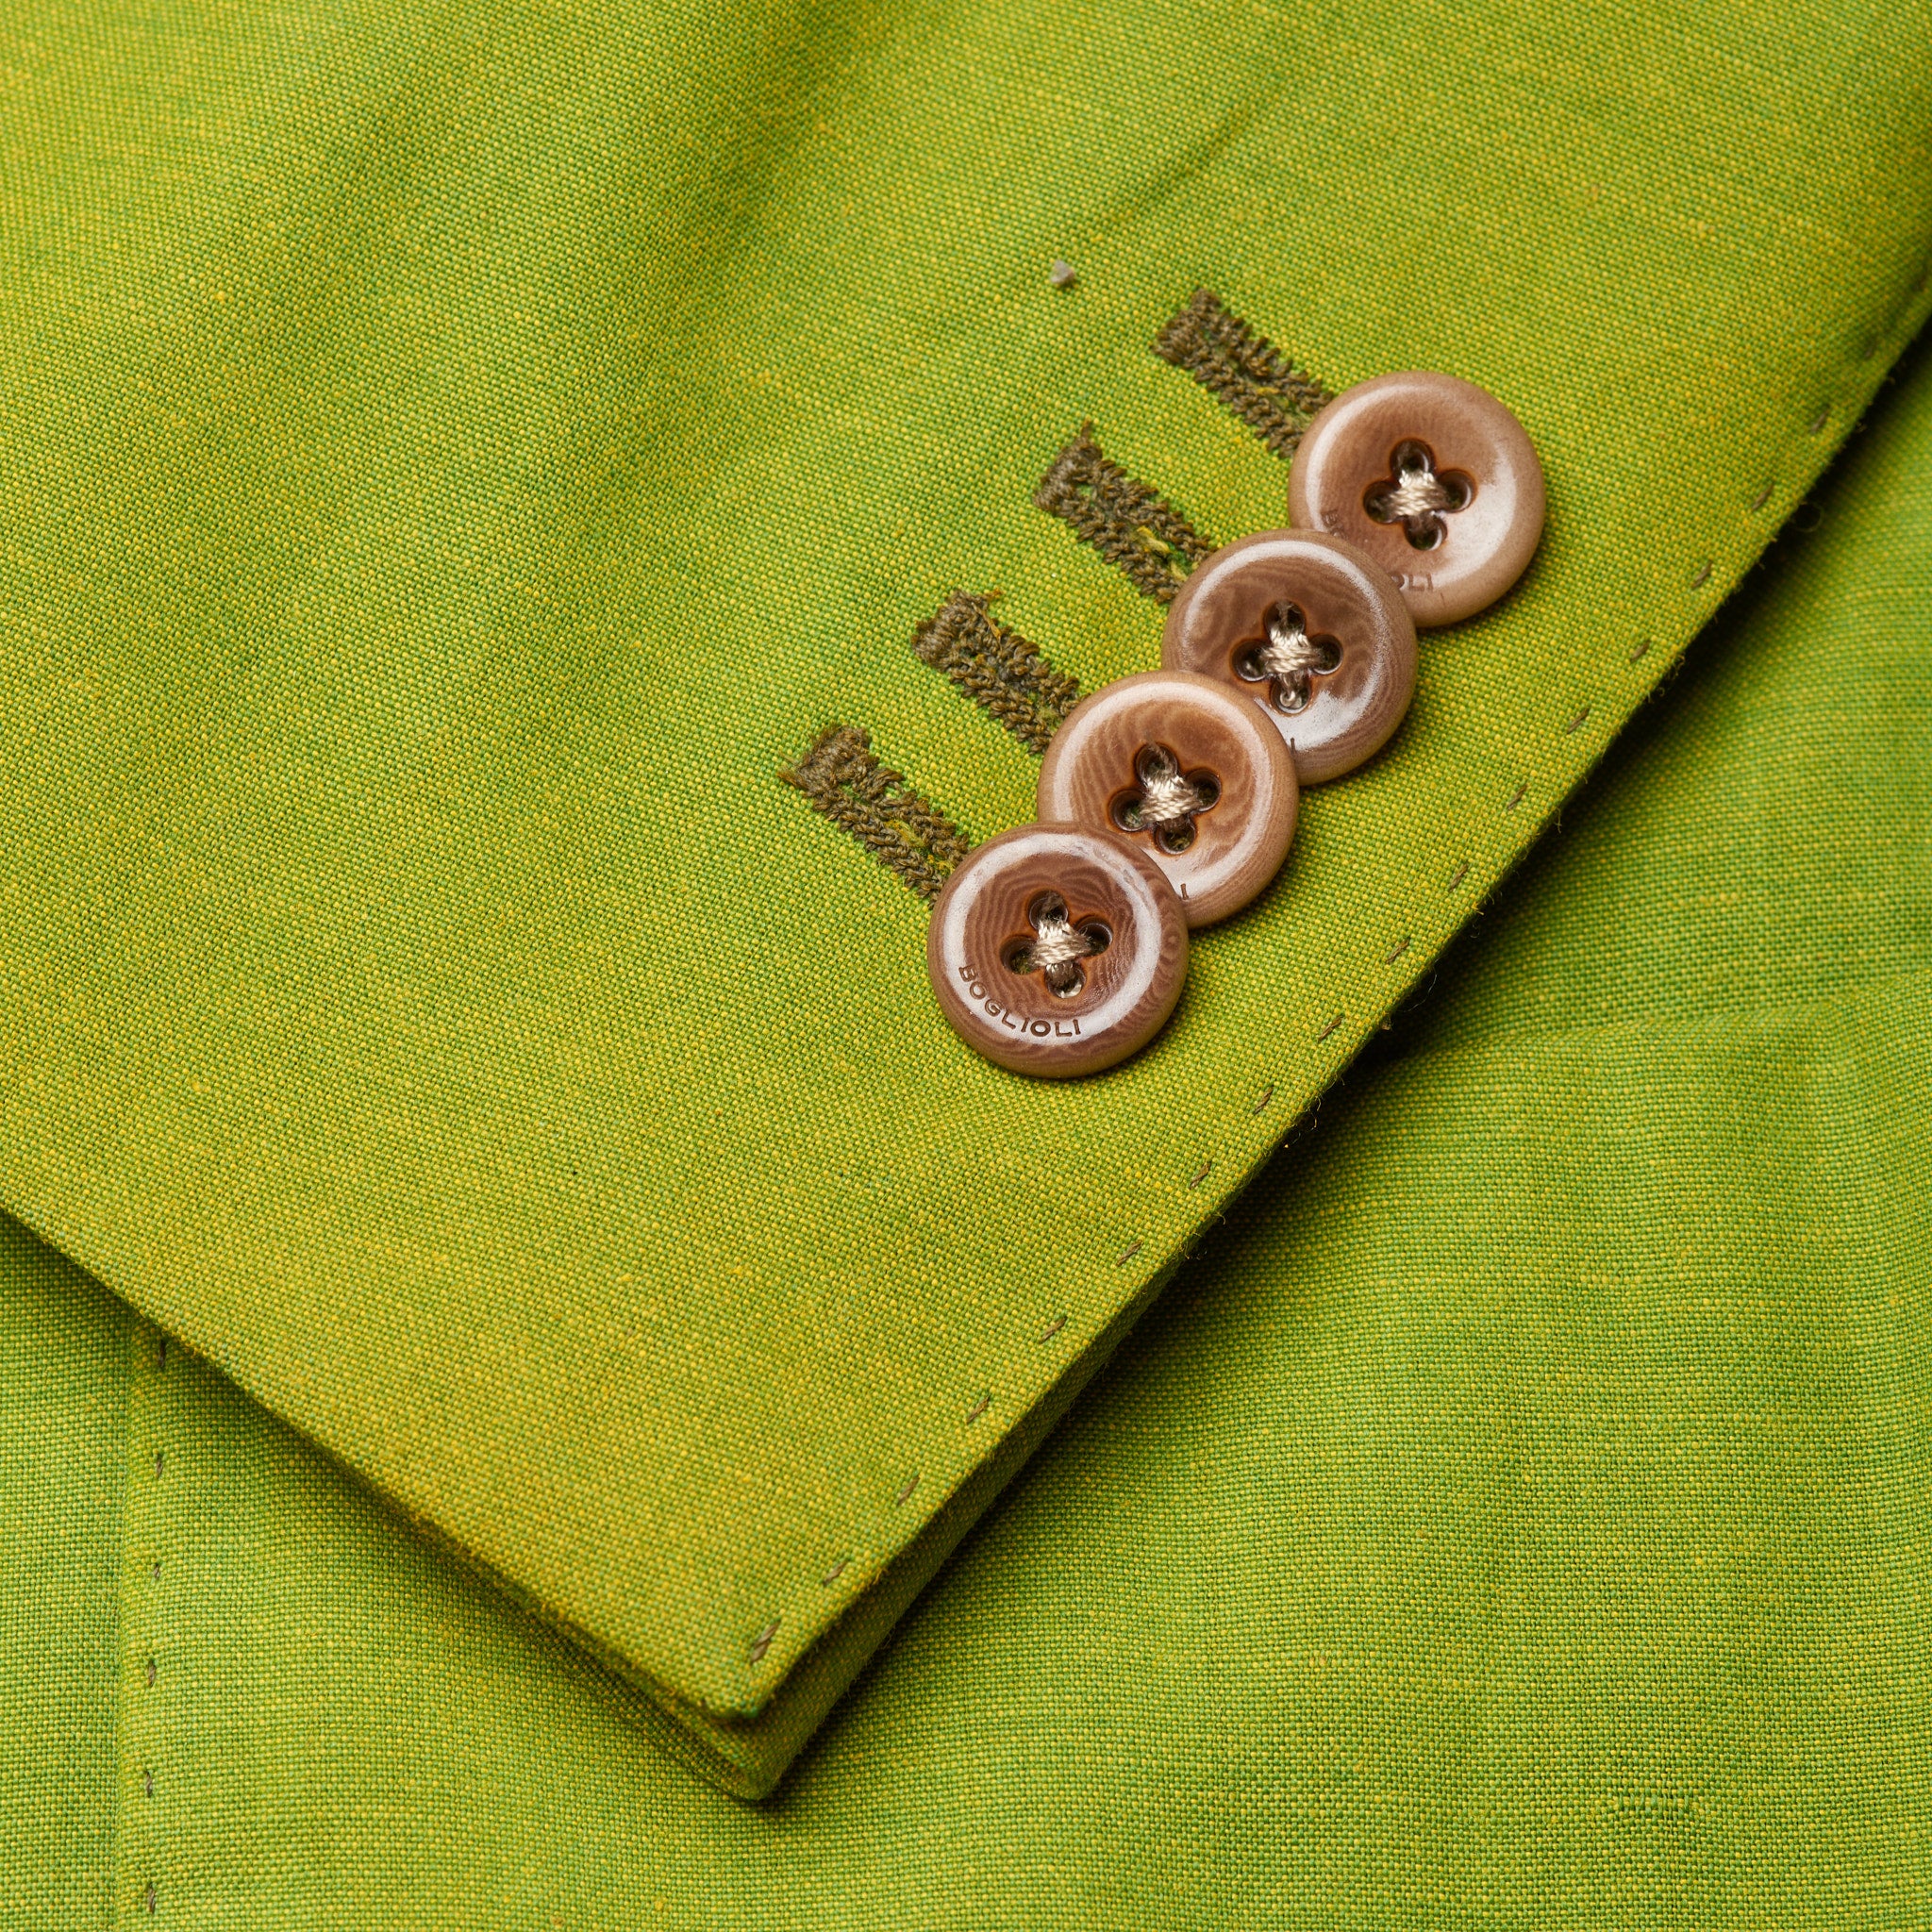 BOGLIOLI Galleria Lime Garment Dyed Wool-Cotton-Mohair Unlined Jacket 50 NEW 40 BOGLIOLI